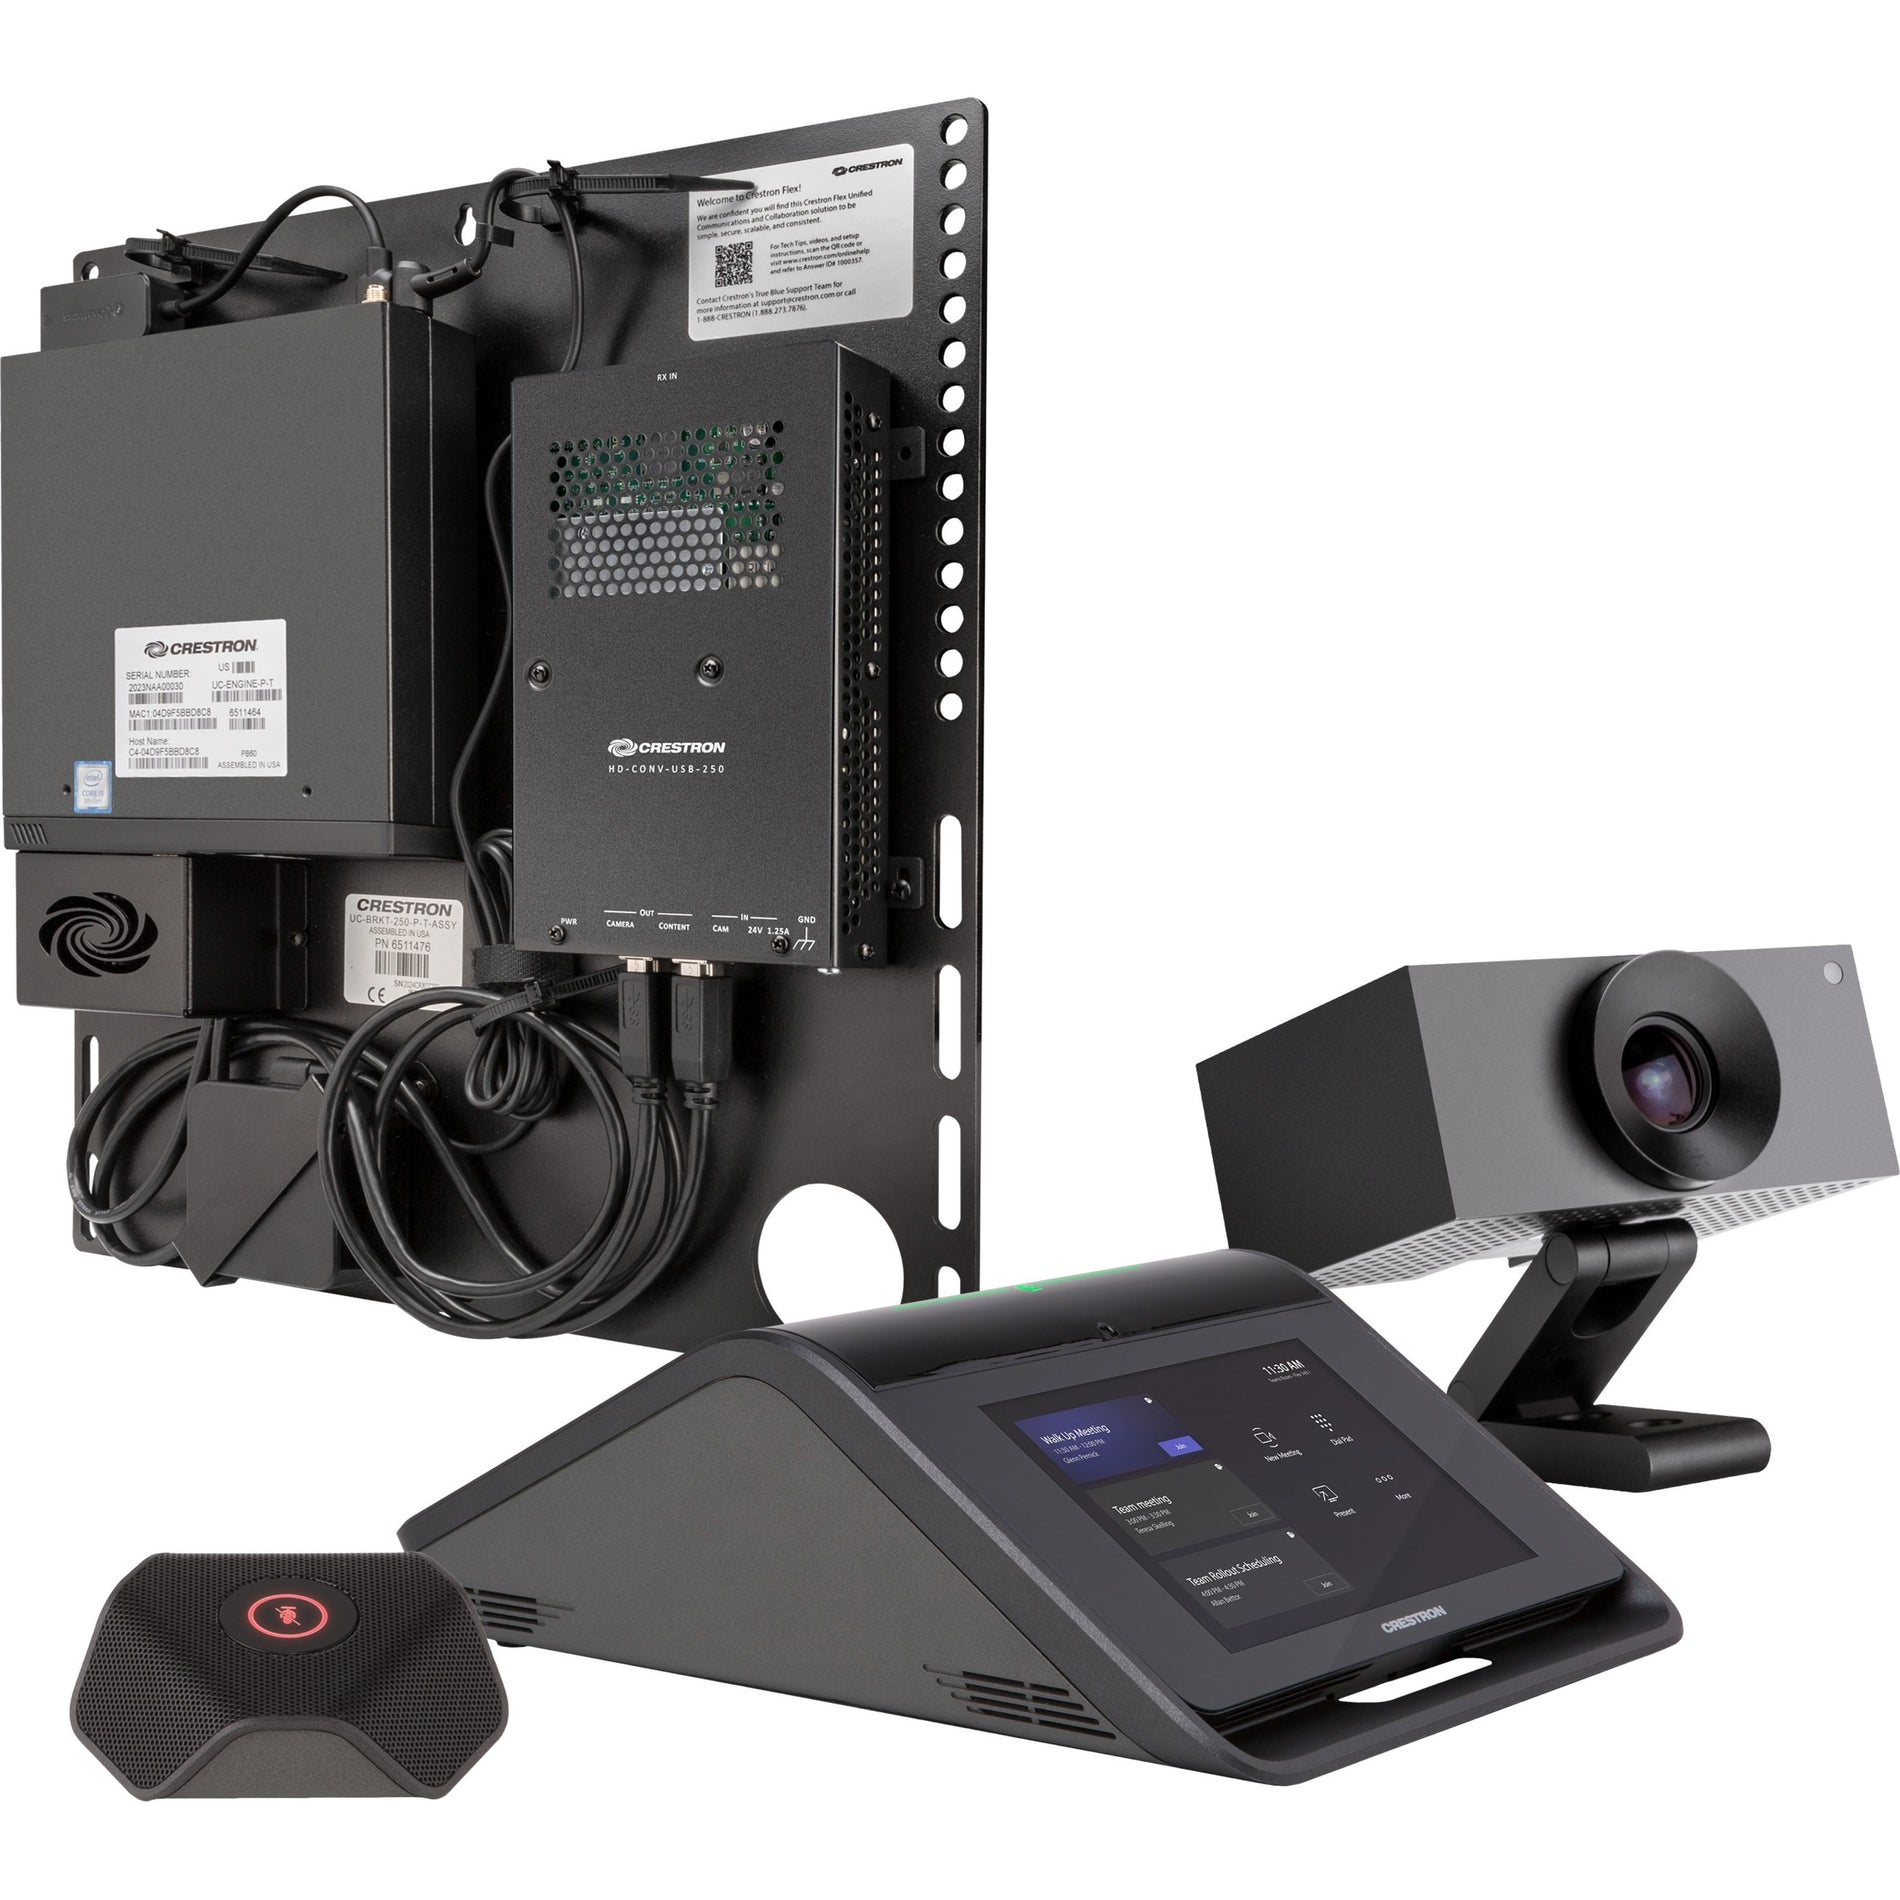 Crestron 6511597 Flex UC-MX70-T Video Conference Equipment for Teams, Full HD, CMOS Image Sensor